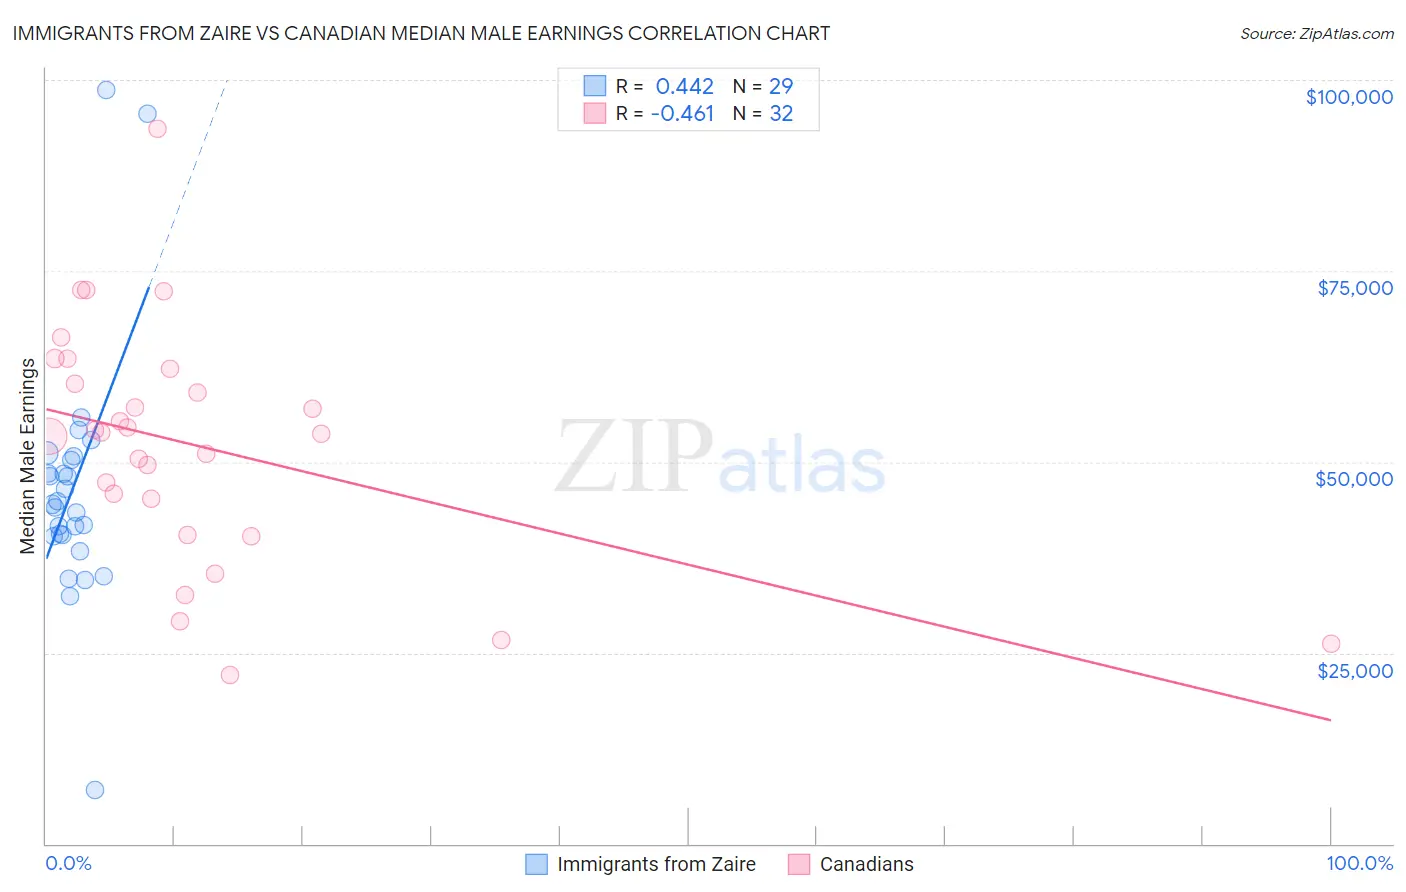 Immigrants from Zaire vs Canadian Median Male Earnings